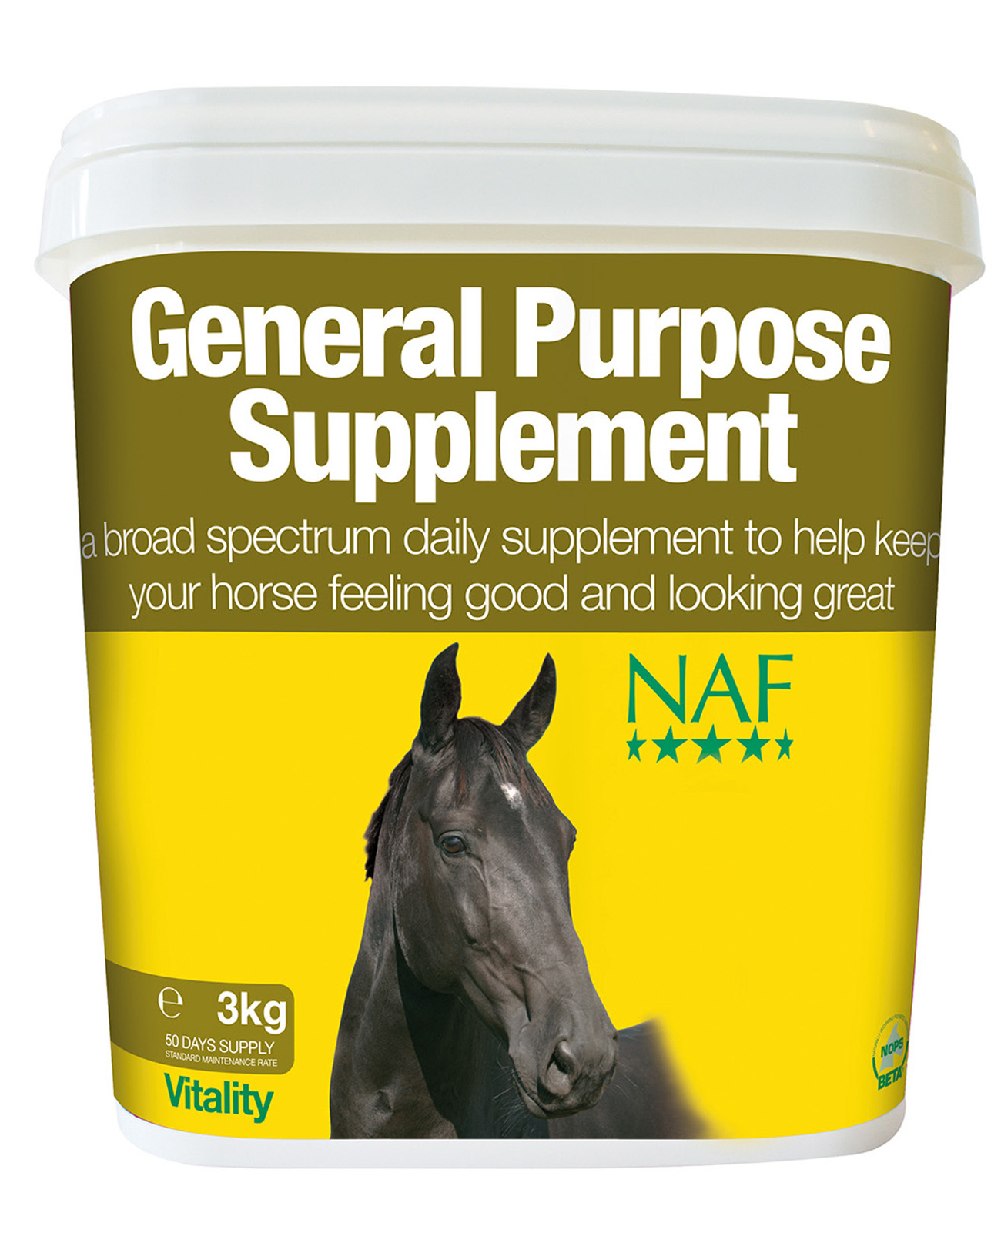 NAF General Purpose Supplement 3kg on white background